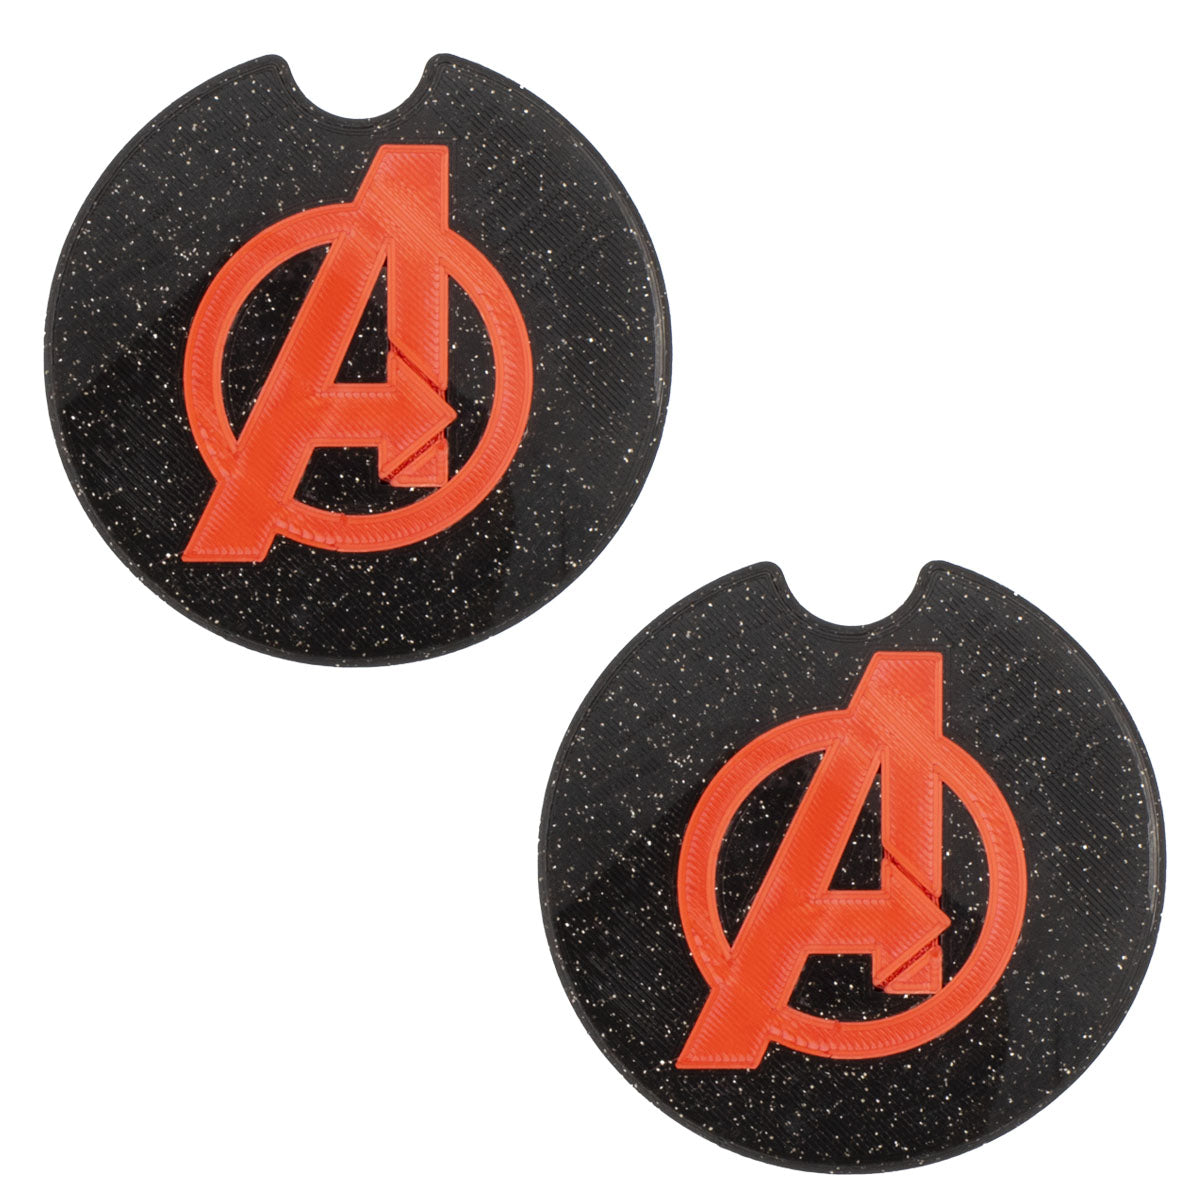 Avengers Car Coasters - Set of 2